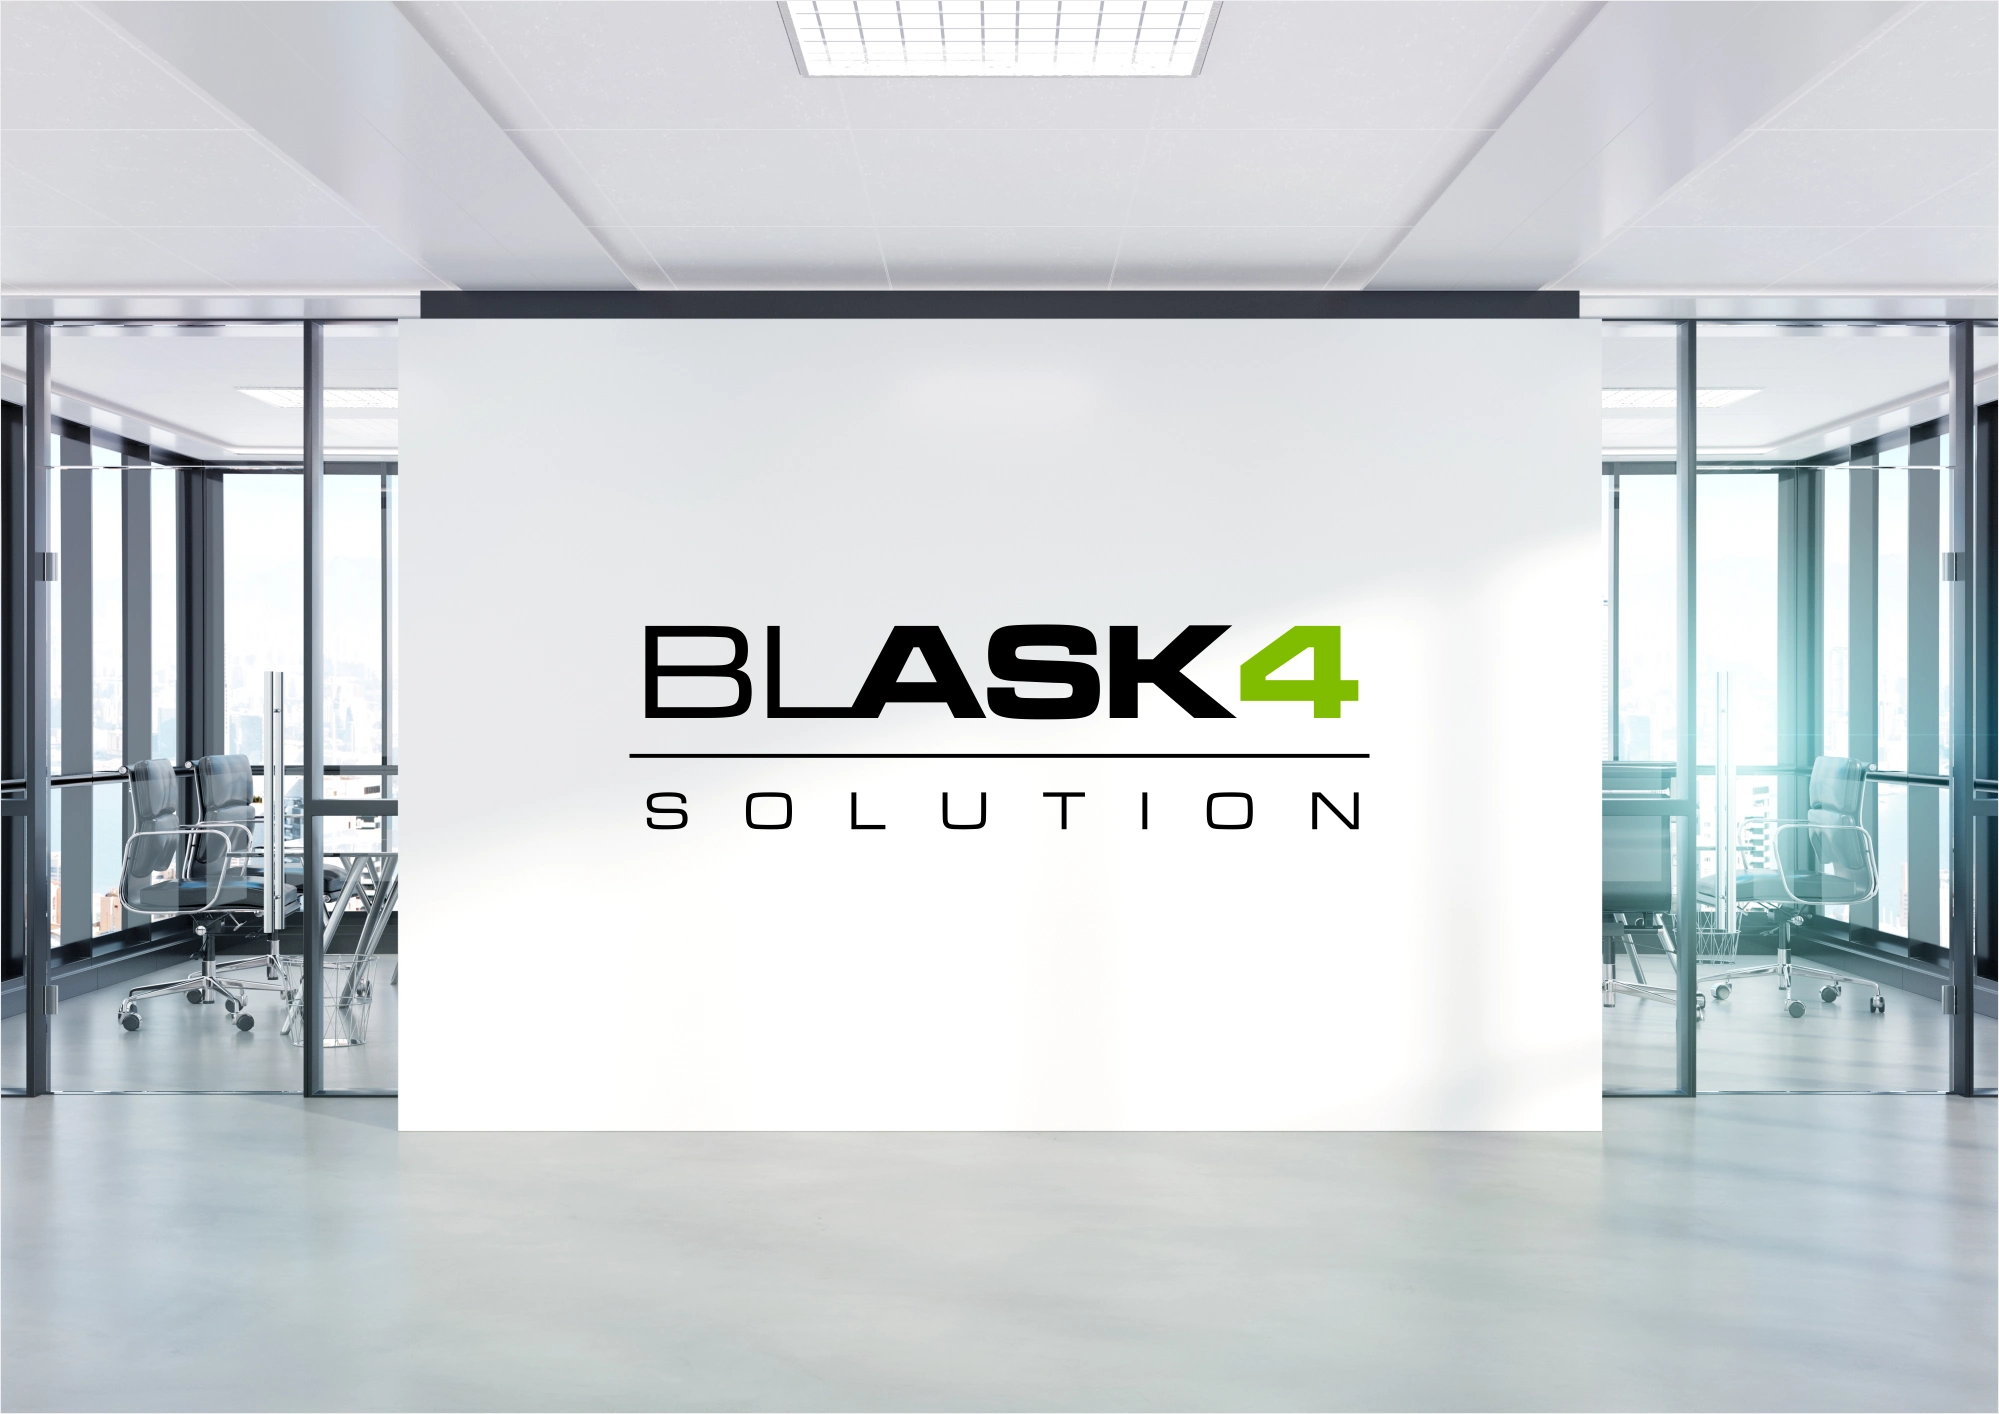 Logo Design blask4solution im Office.